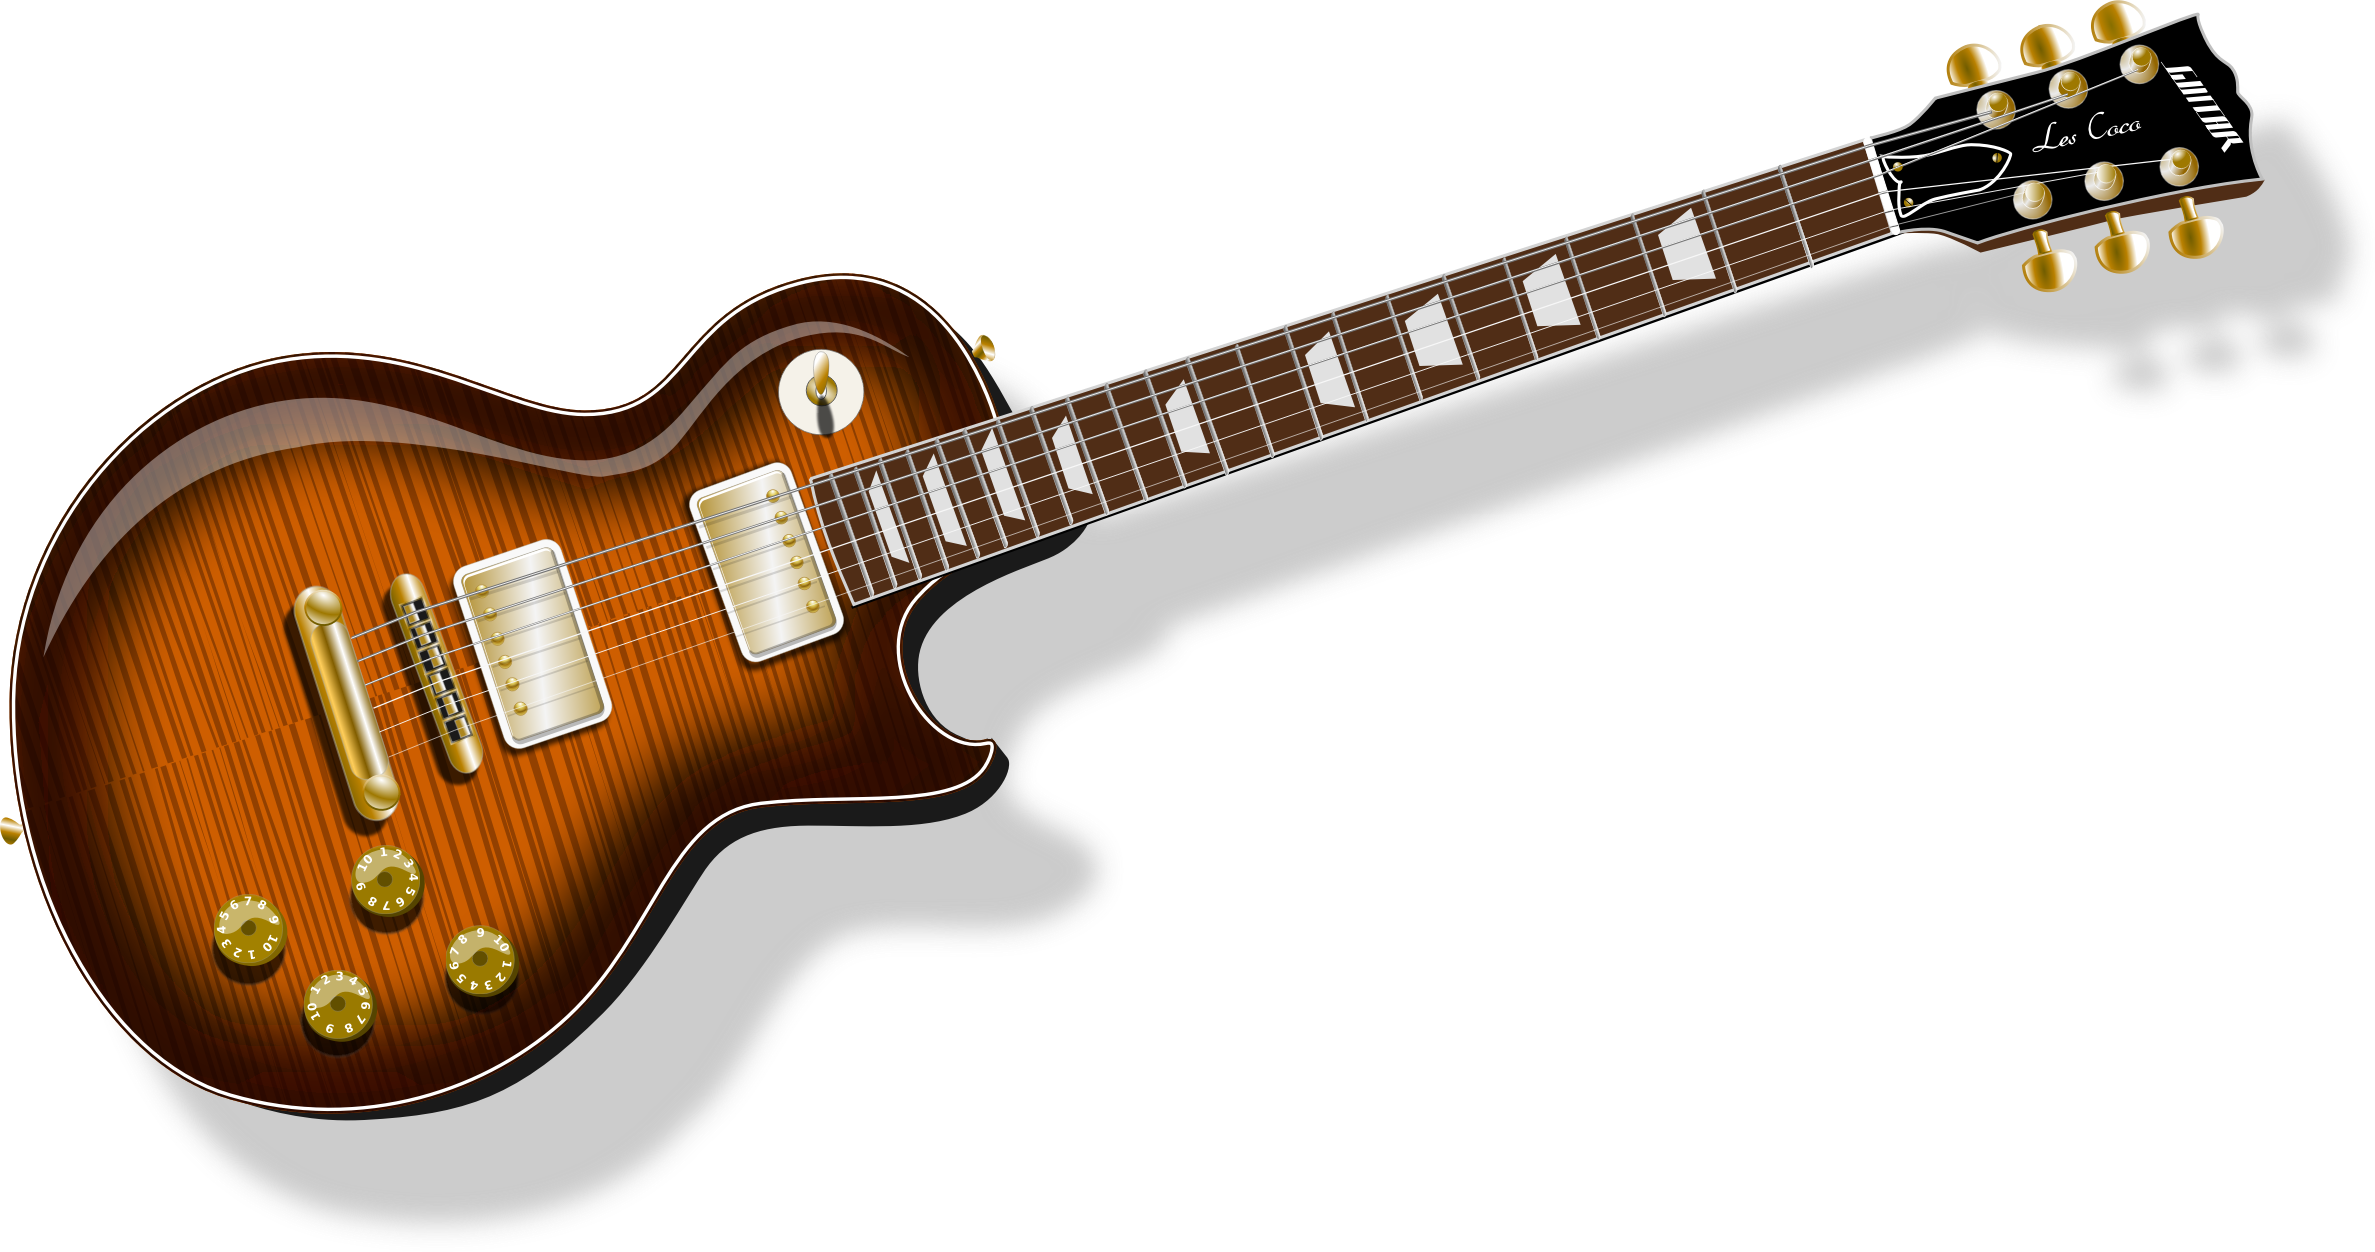 Rock Guitar HD wallpapers, Desktop wallpaper - most viewed